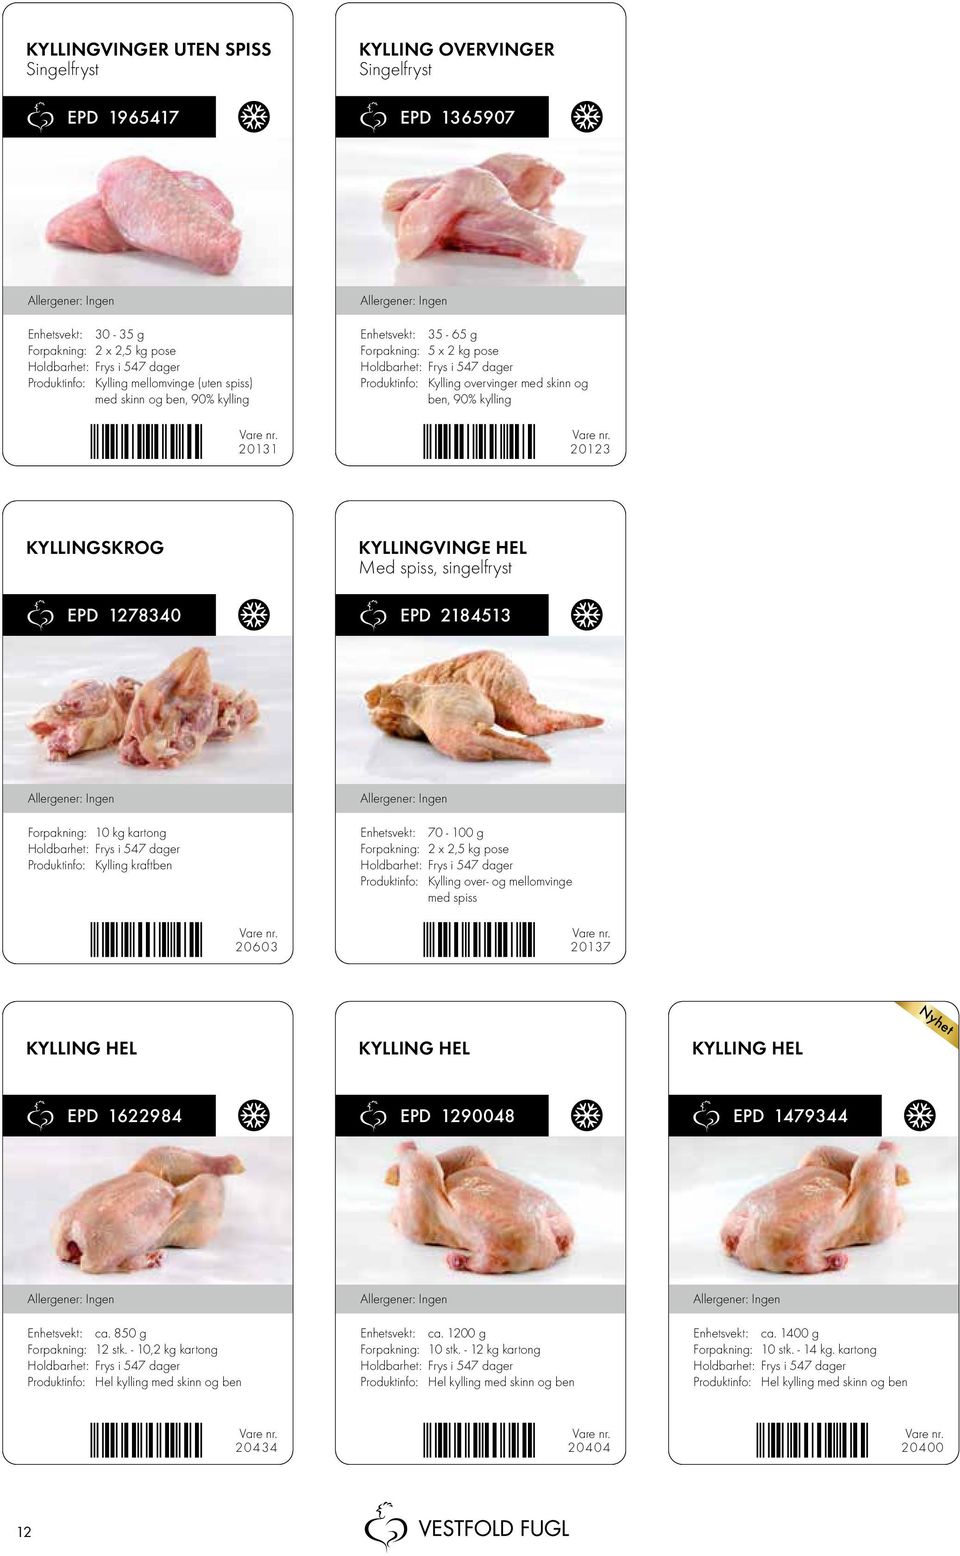 Forpakning: 10 kg kartong Produktinfo: Kylling kraftben 20603 Enhetsvekt: 70-100 g Produktinfo: Kylling over- og mellomvinge med spiss 20137 kylling hel kylling hel kylling hel EPD 1622984 EPD